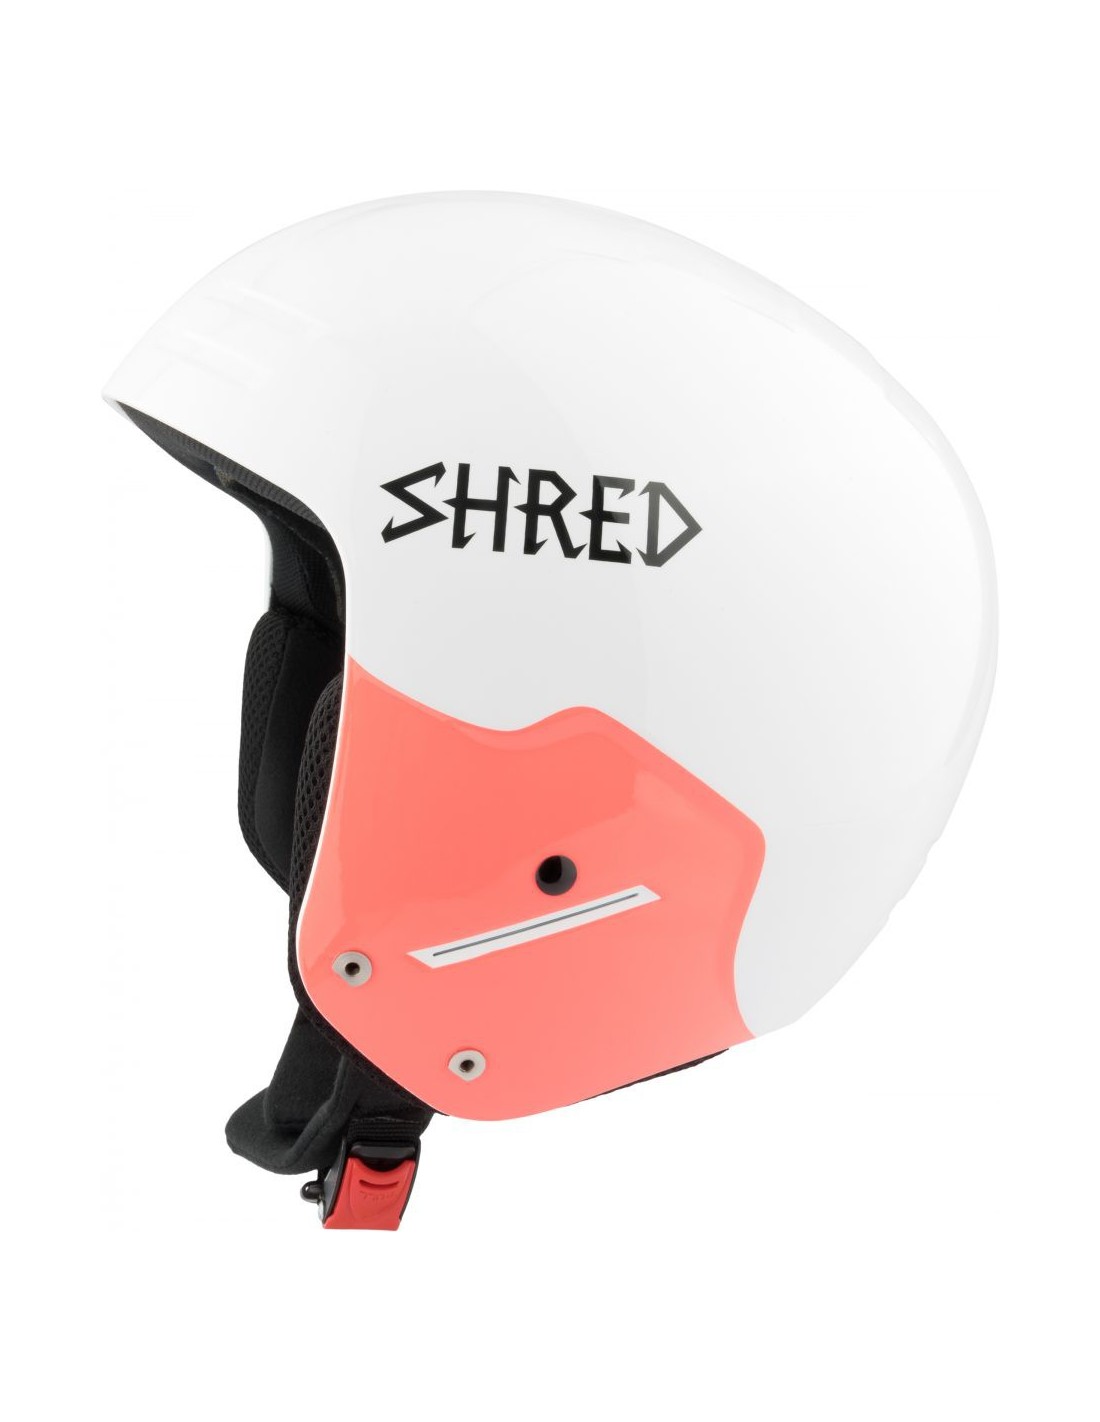 Shred Basher Noshock Wipeout White Skihelmbauweise - Vollhelm, Skihelmgewicht - 651 - 700 g, Skihelmfarbe - White, Skihelmgröße - 58 - 60 cm, von Shred